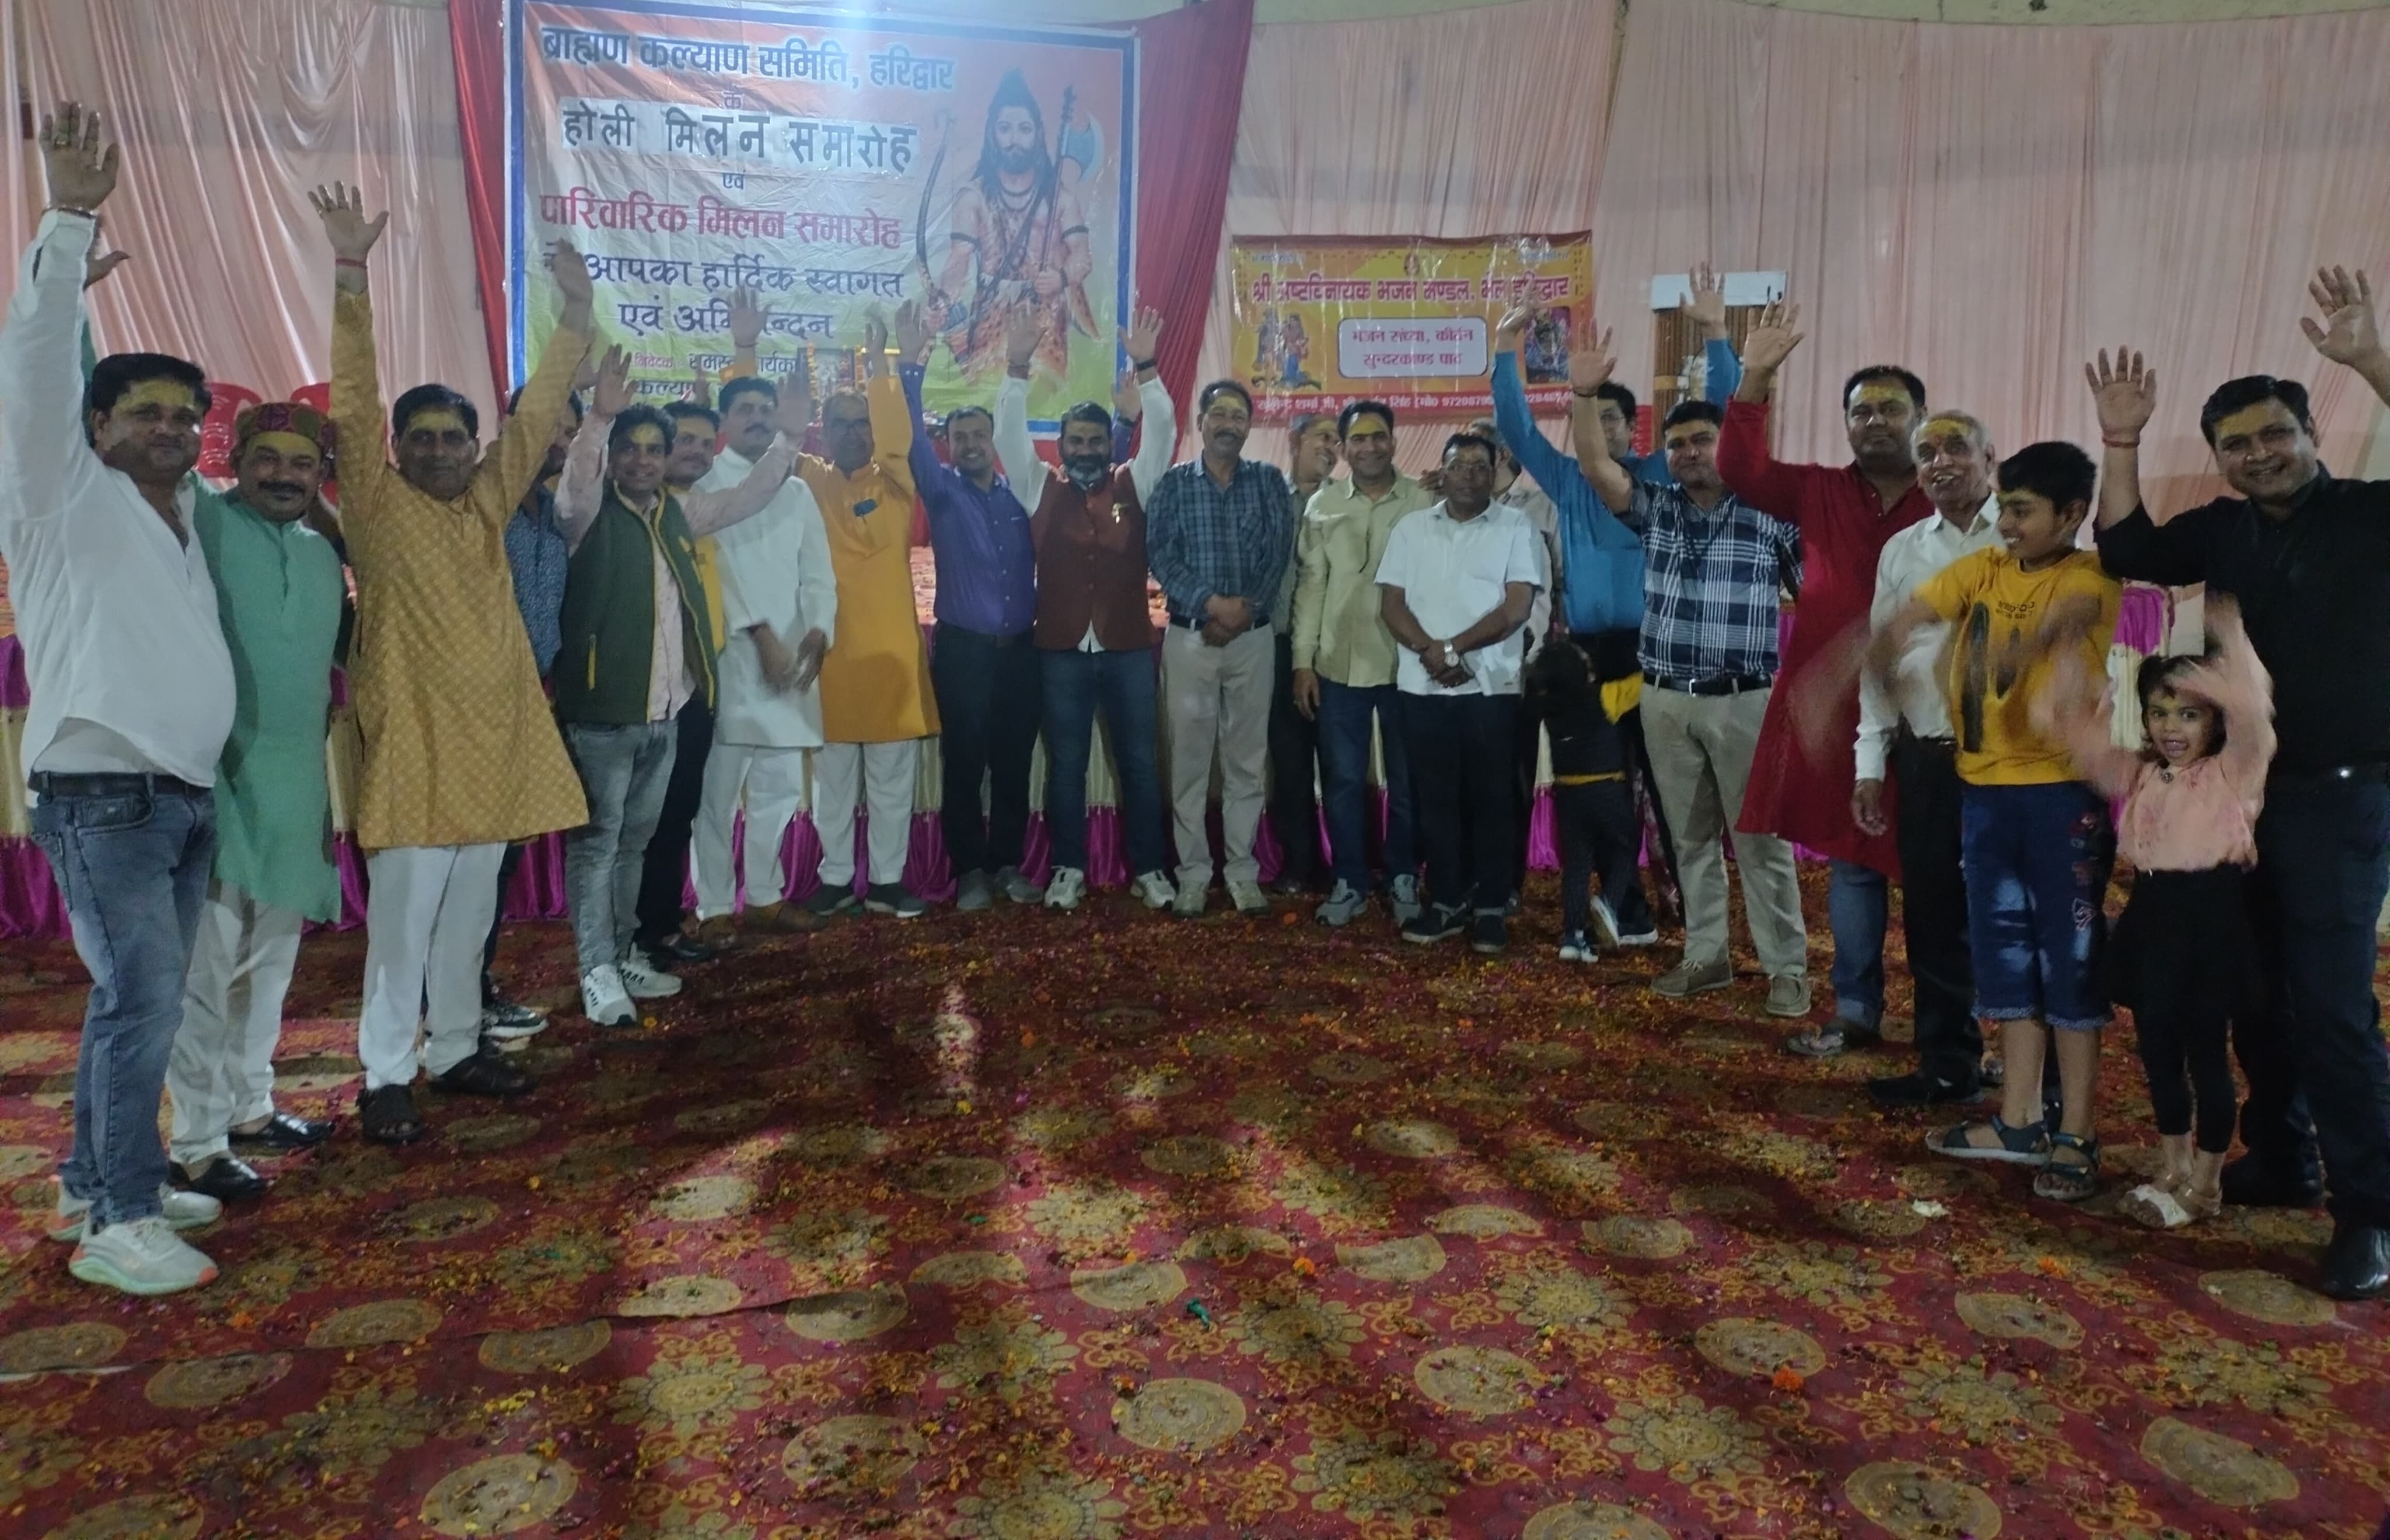 ब्राह्मण कल्याण समिति हरिद्वार ने धूमधाम से मनाया होली मिलन समारोह